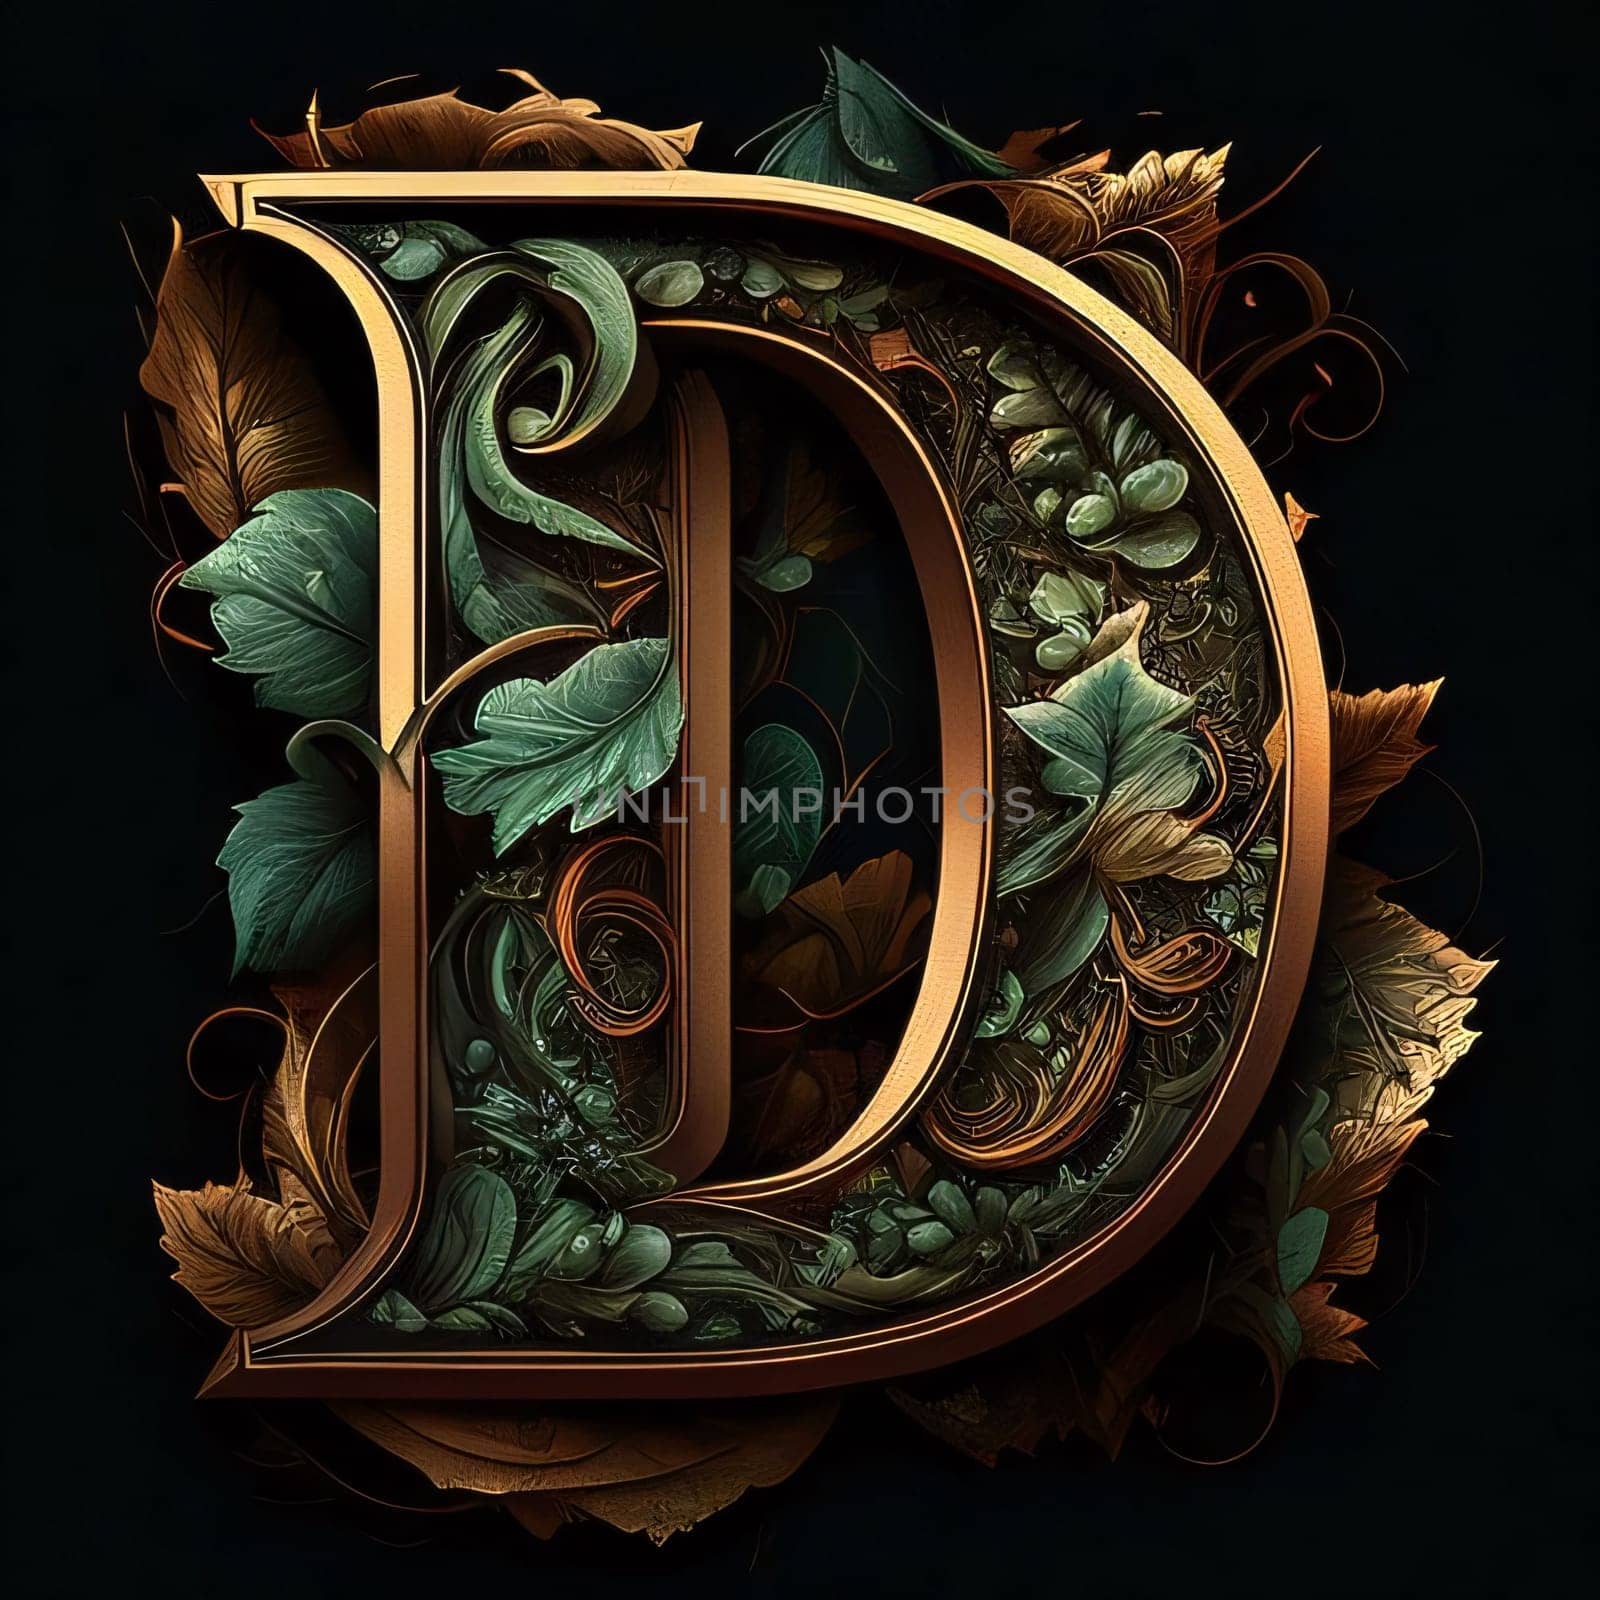 Graphic alphabet letters: Letter D with floral ornament on black background. 3D illustration.